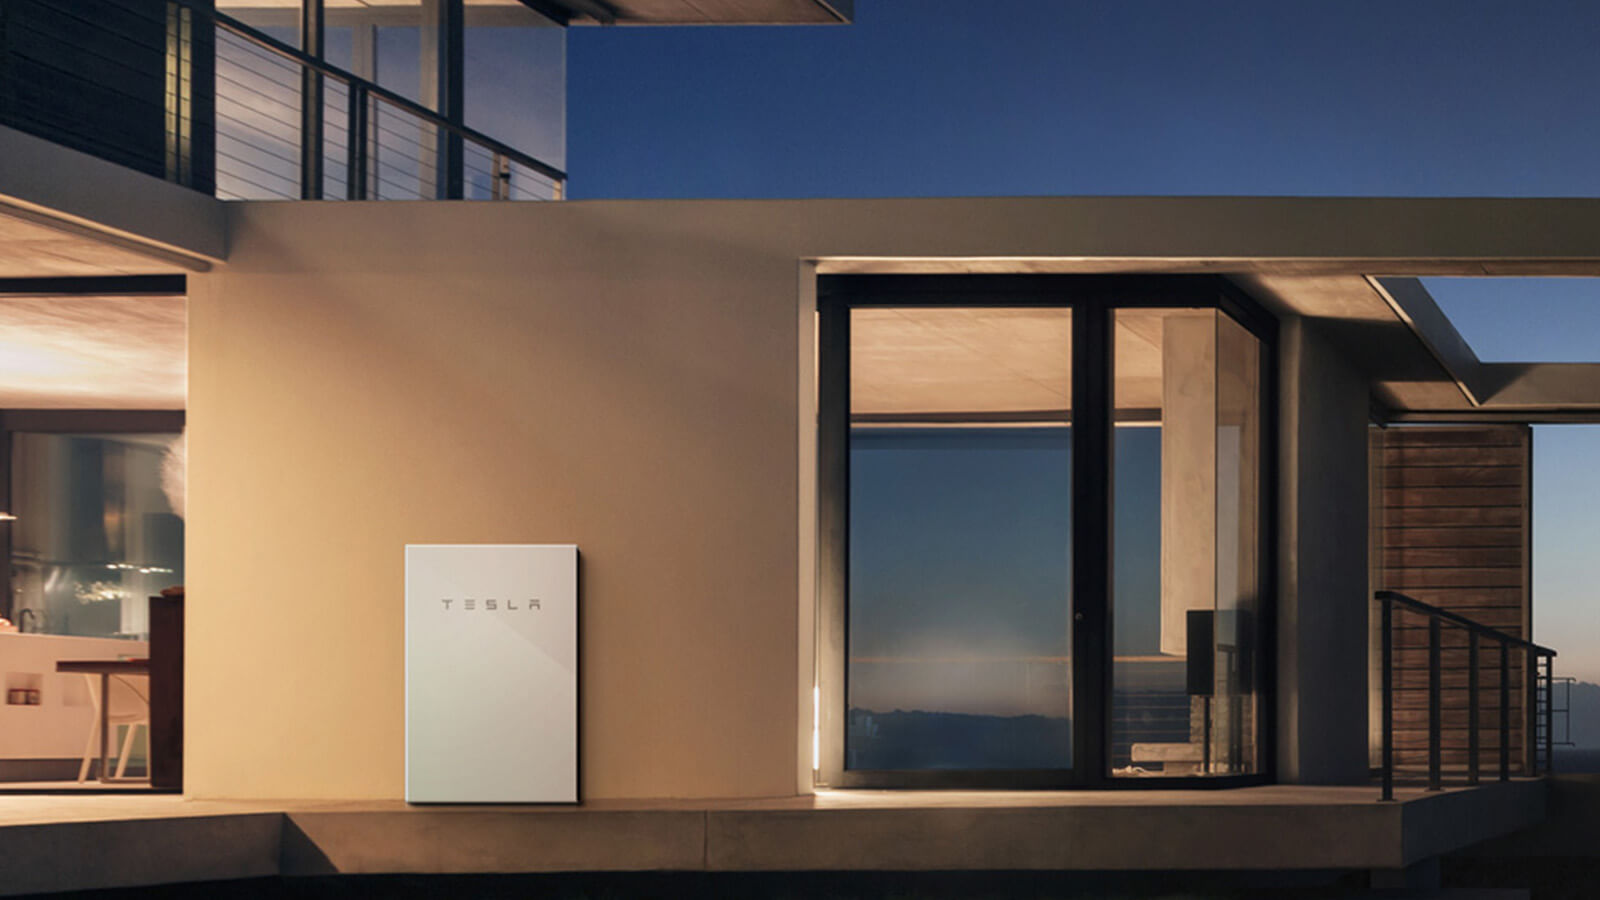   Tesla: Powerwall + Solar Panels